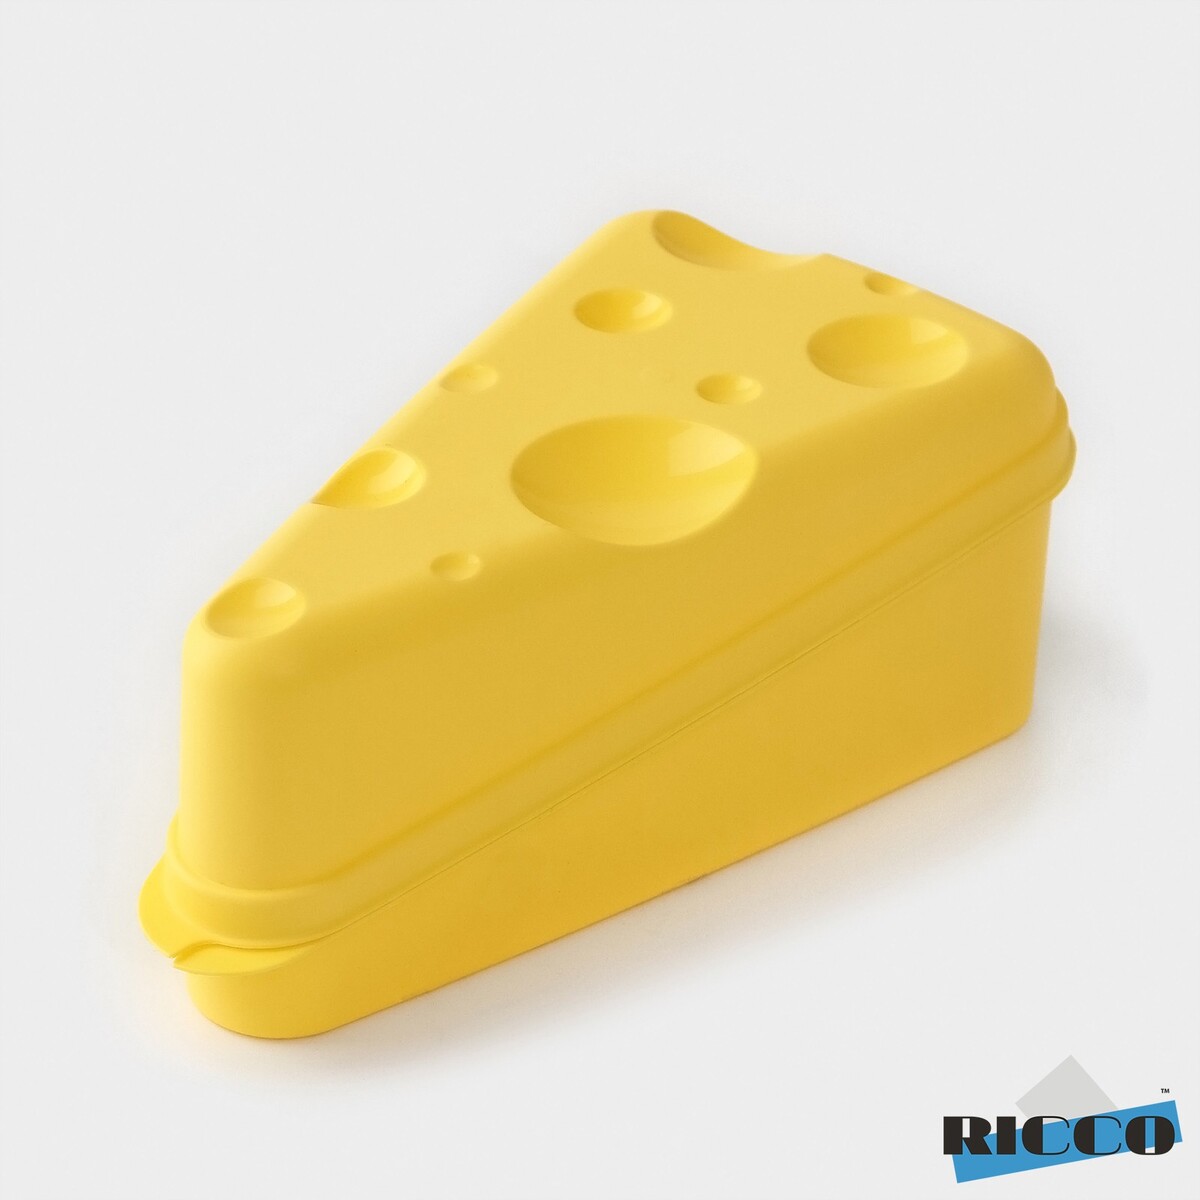 Контейнер для сыра ricco, 19,8х×10,6×7,5 см, цвет желтый контейнер для сыра ricco 19 8х×10 6×7 5 см желтый